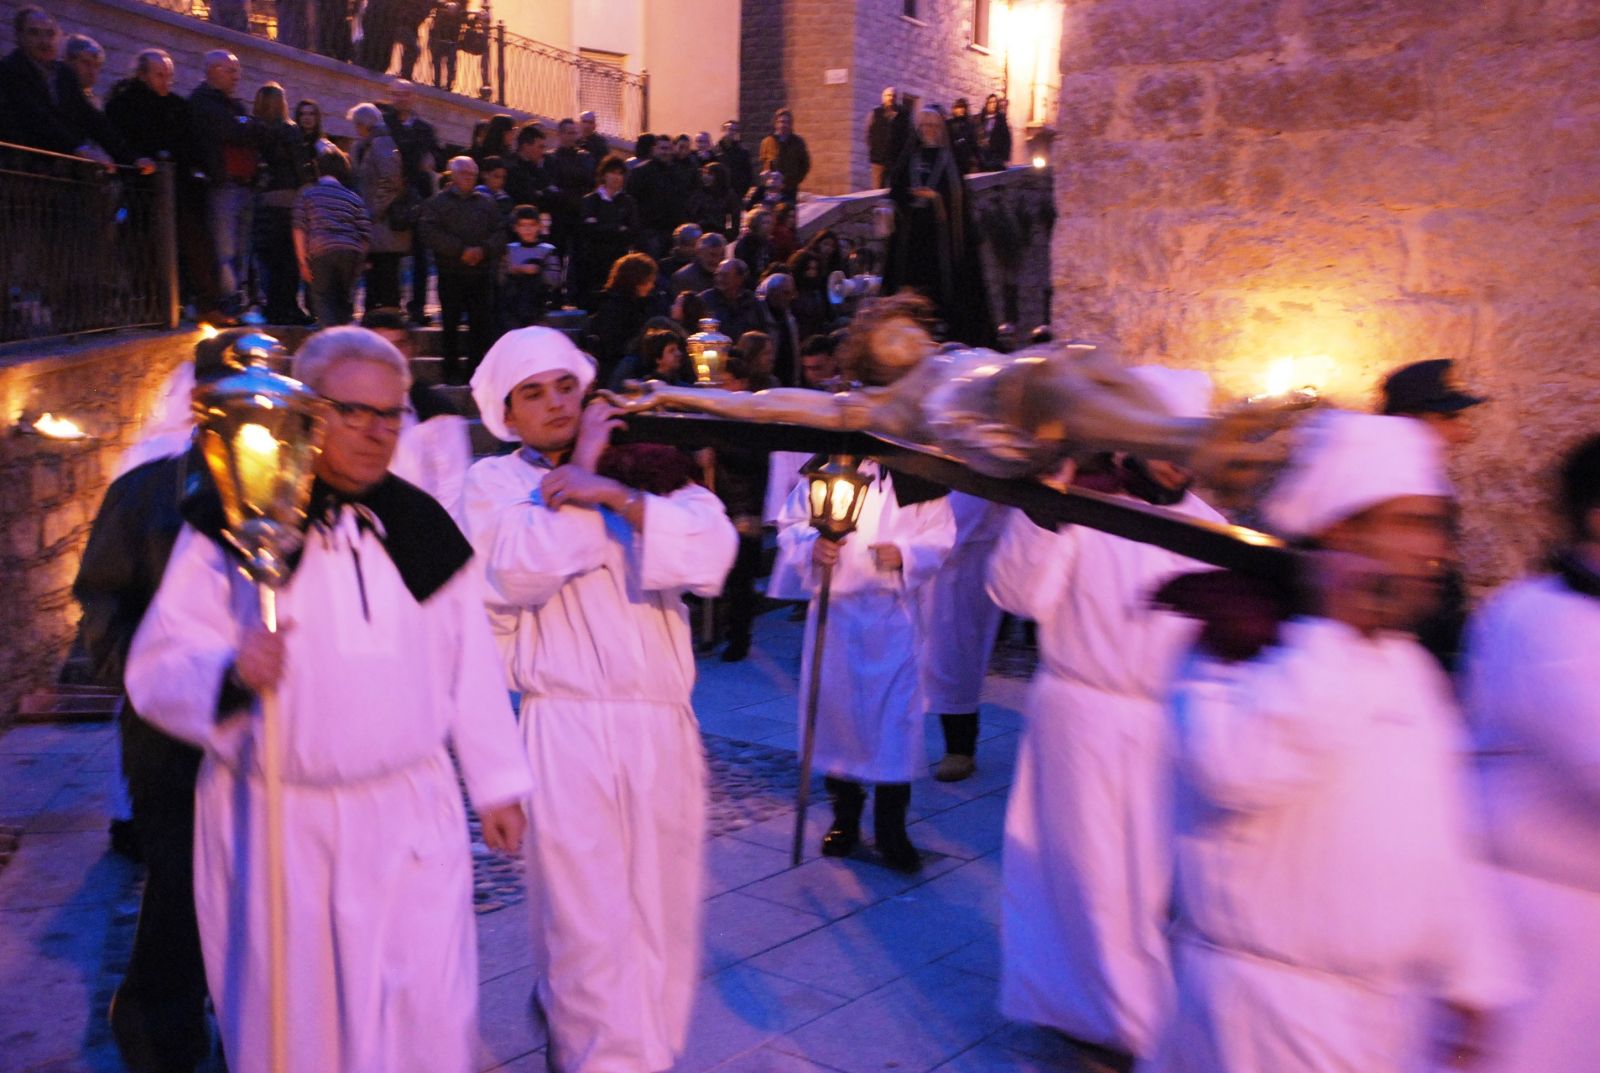 Settimana Santa religious event in Sardinia